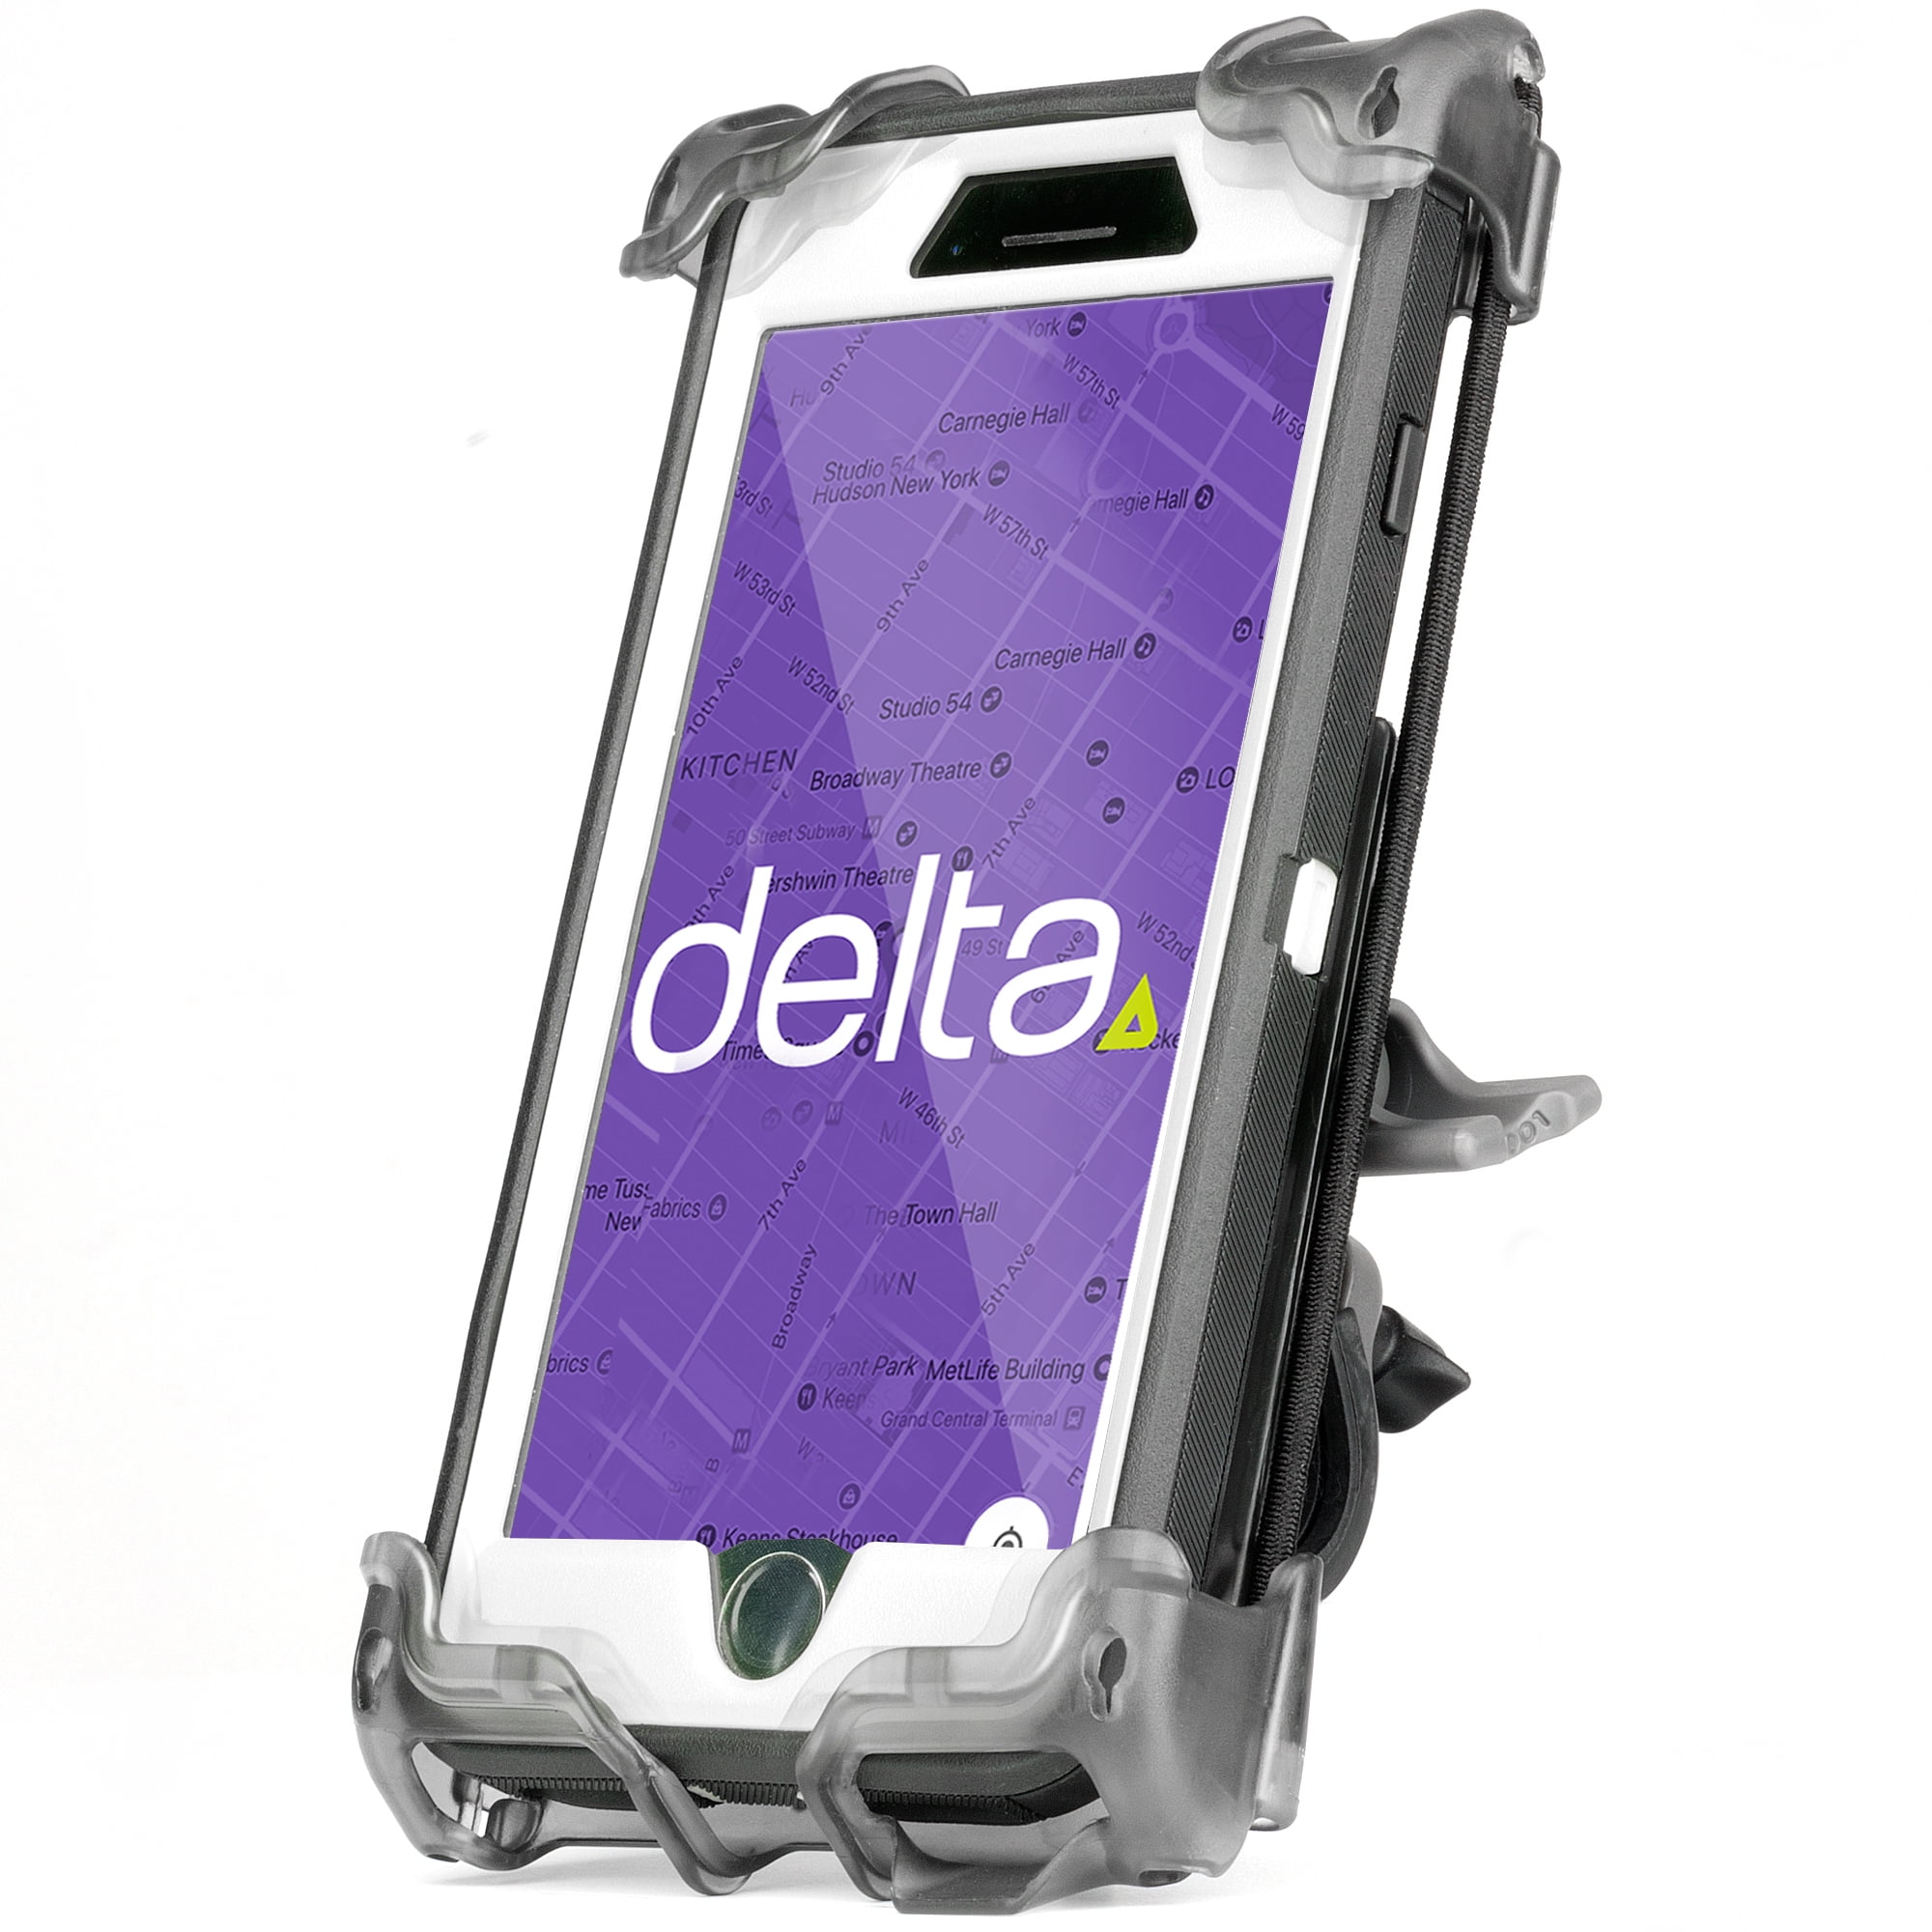 delta phone holder bike